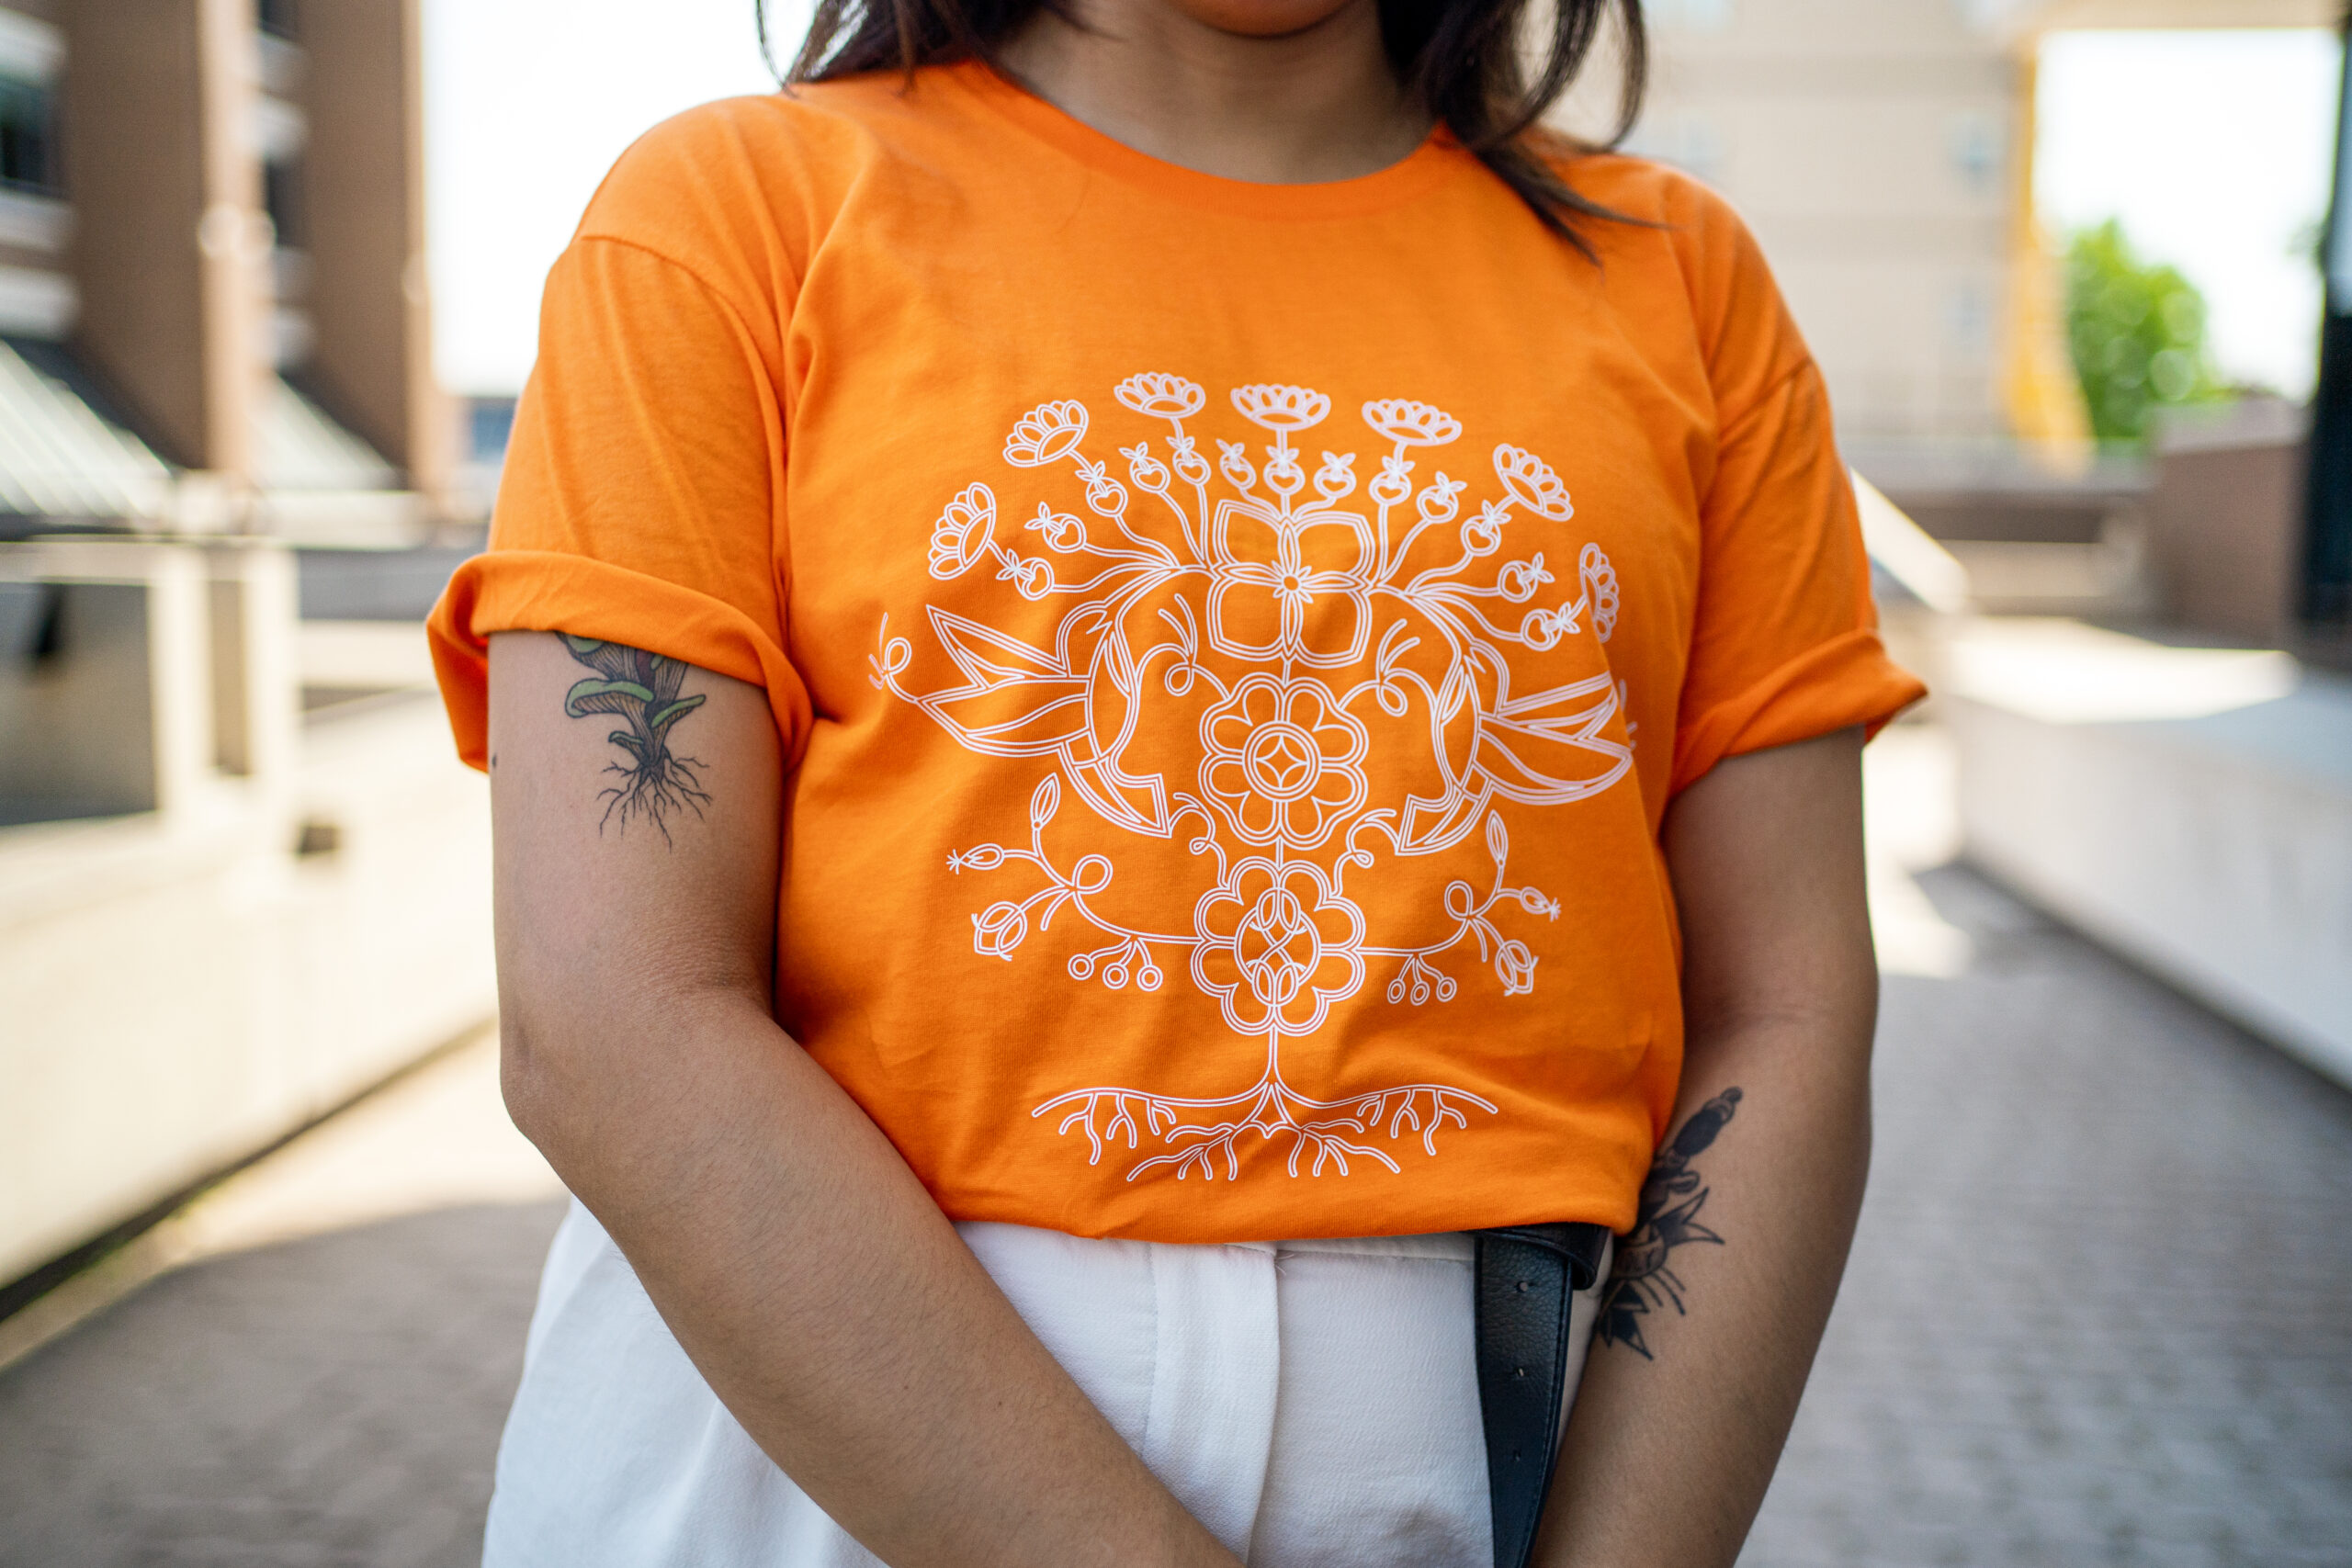 Grad unveils new Orange Shirt Day design to inspire hope and strength ...